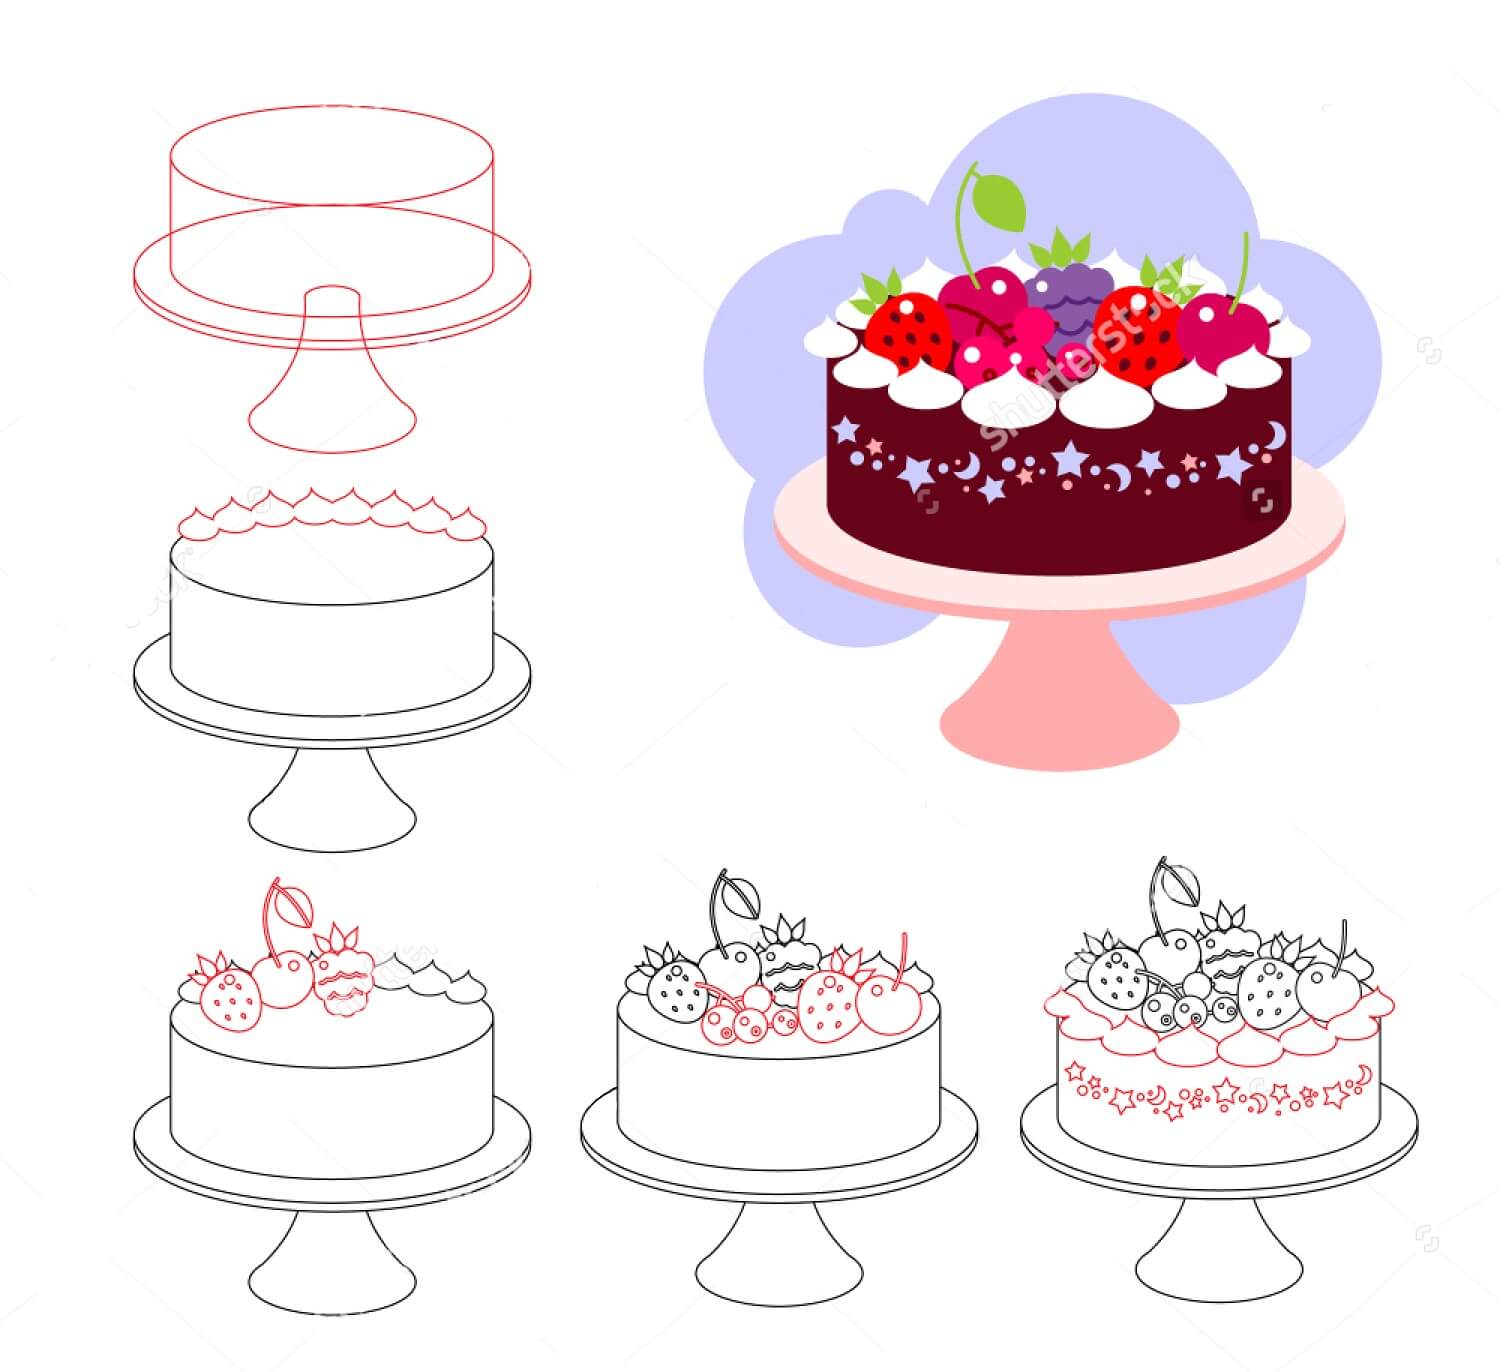 Custard cake idea (4) Drawing Ideas